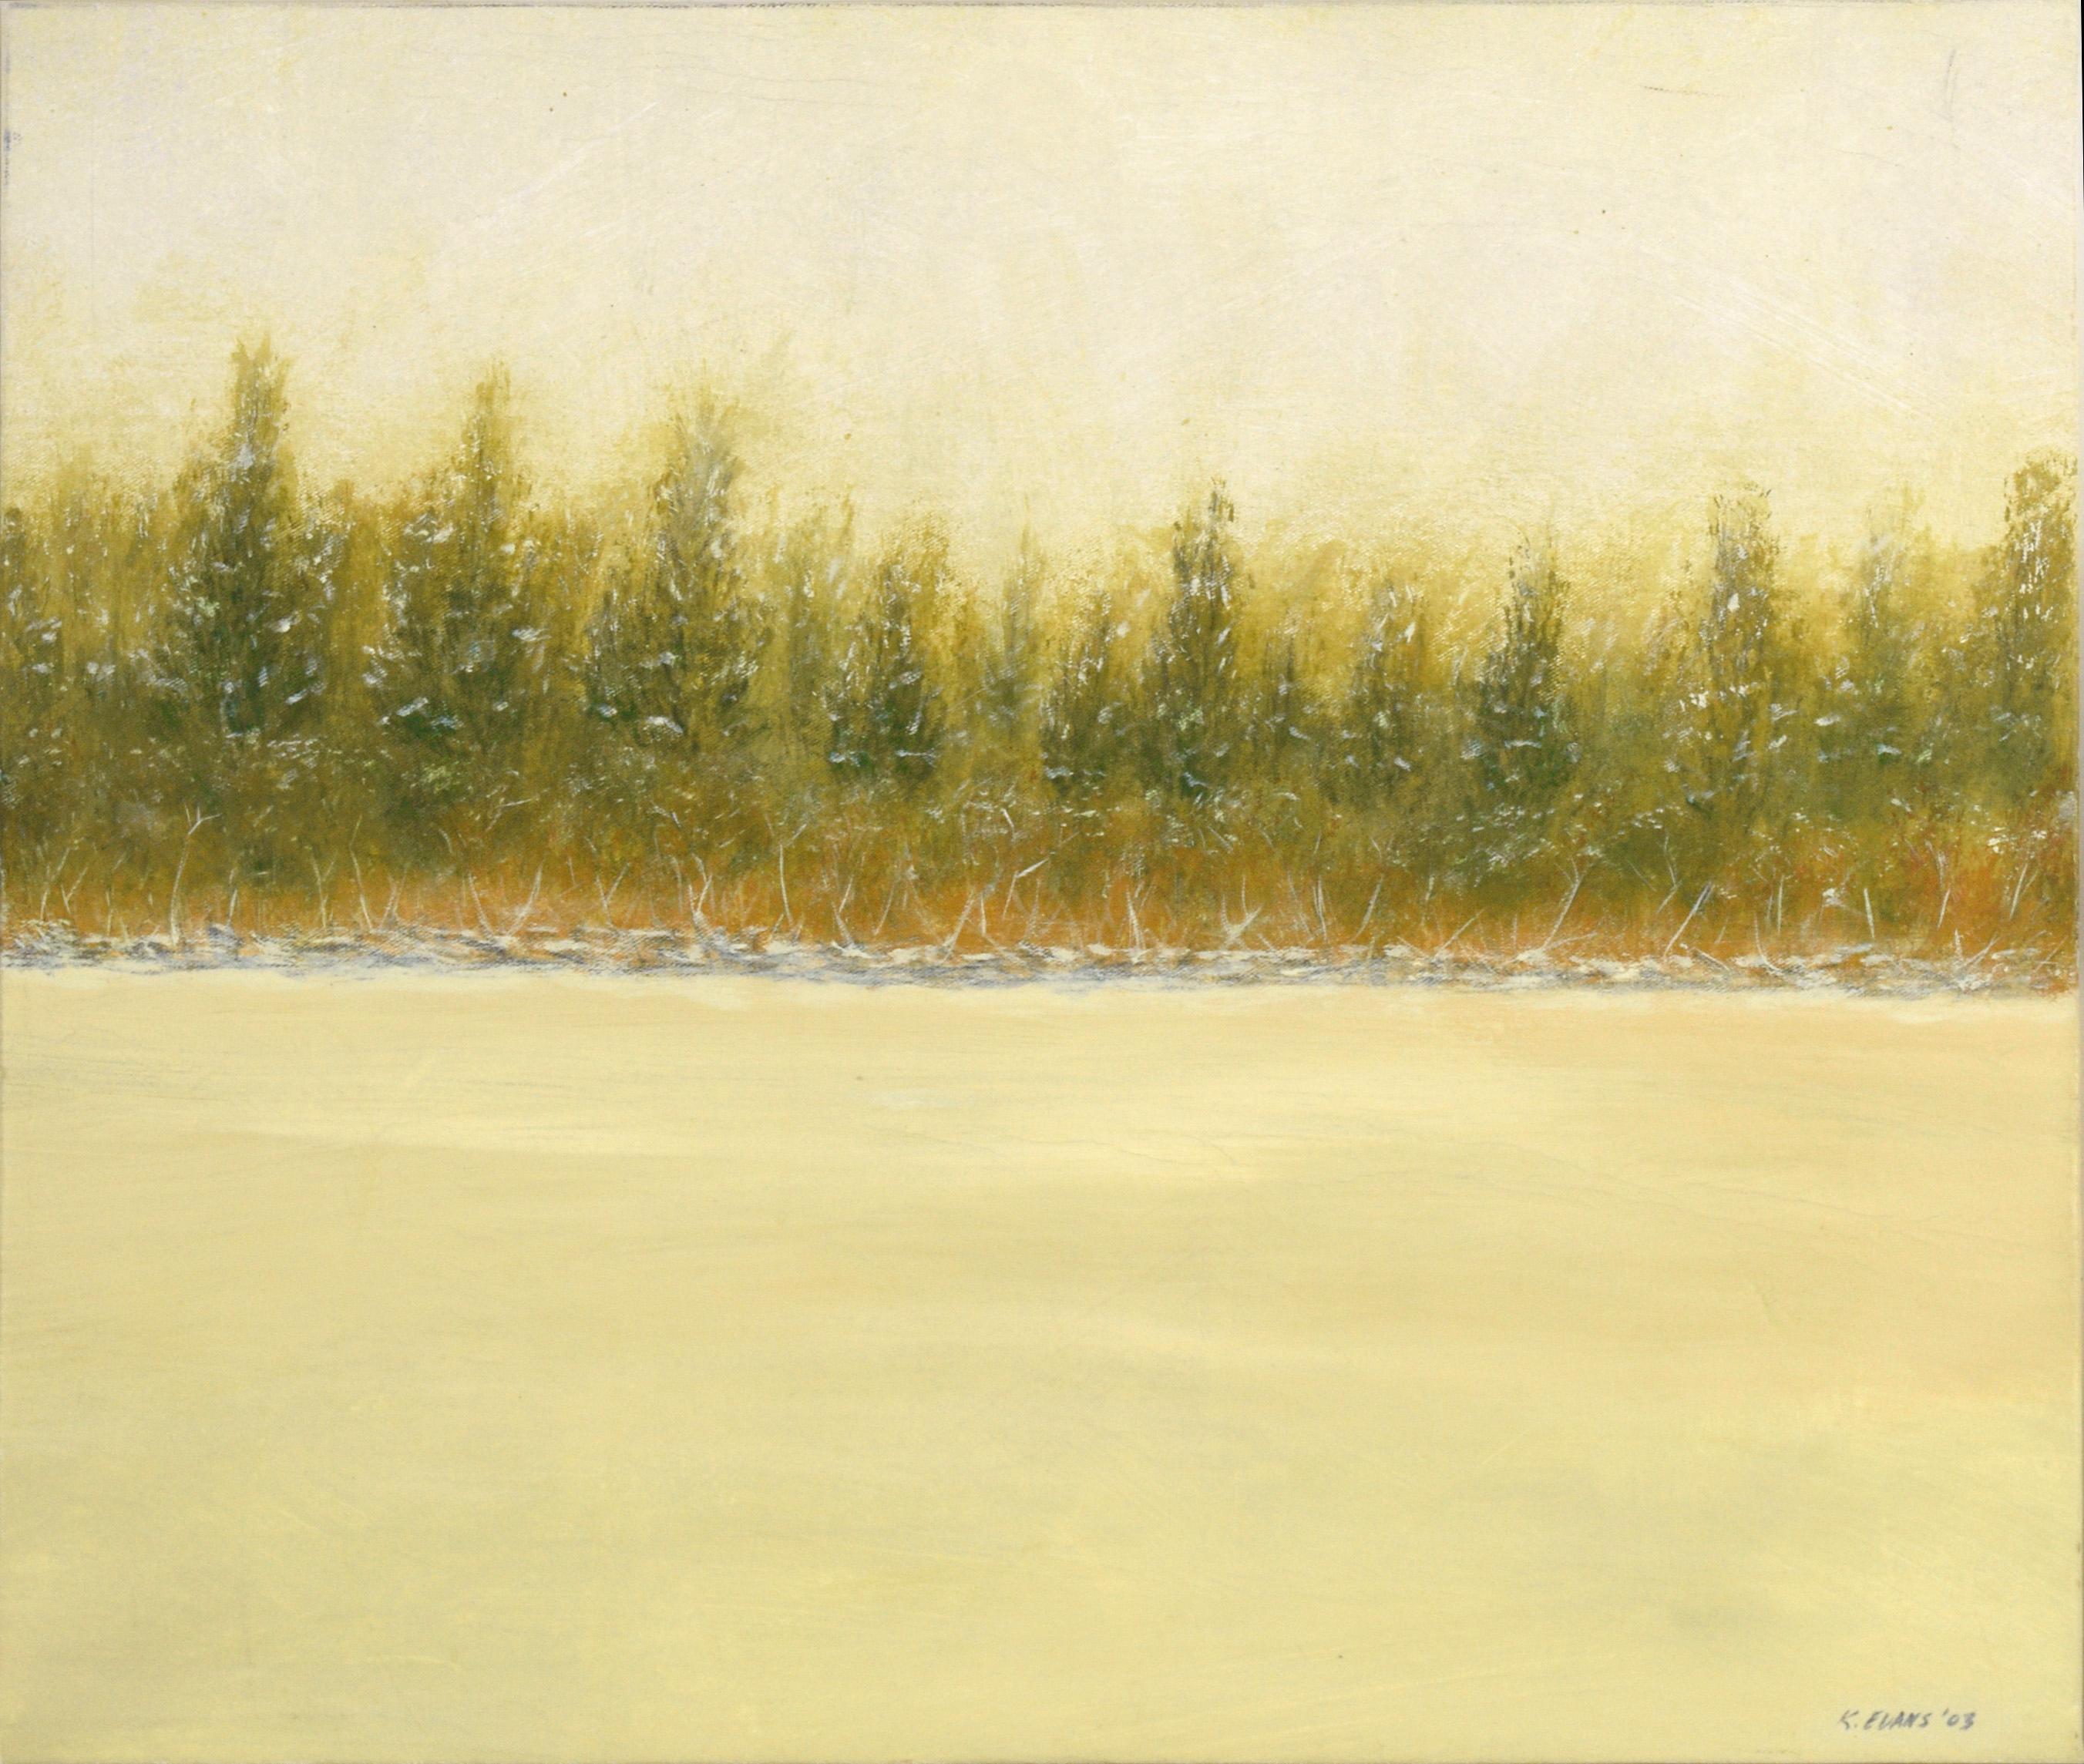 Karen Evans Landscape Painting - Across the Frozen Pond - Winter Landscape in Oil on Canvas